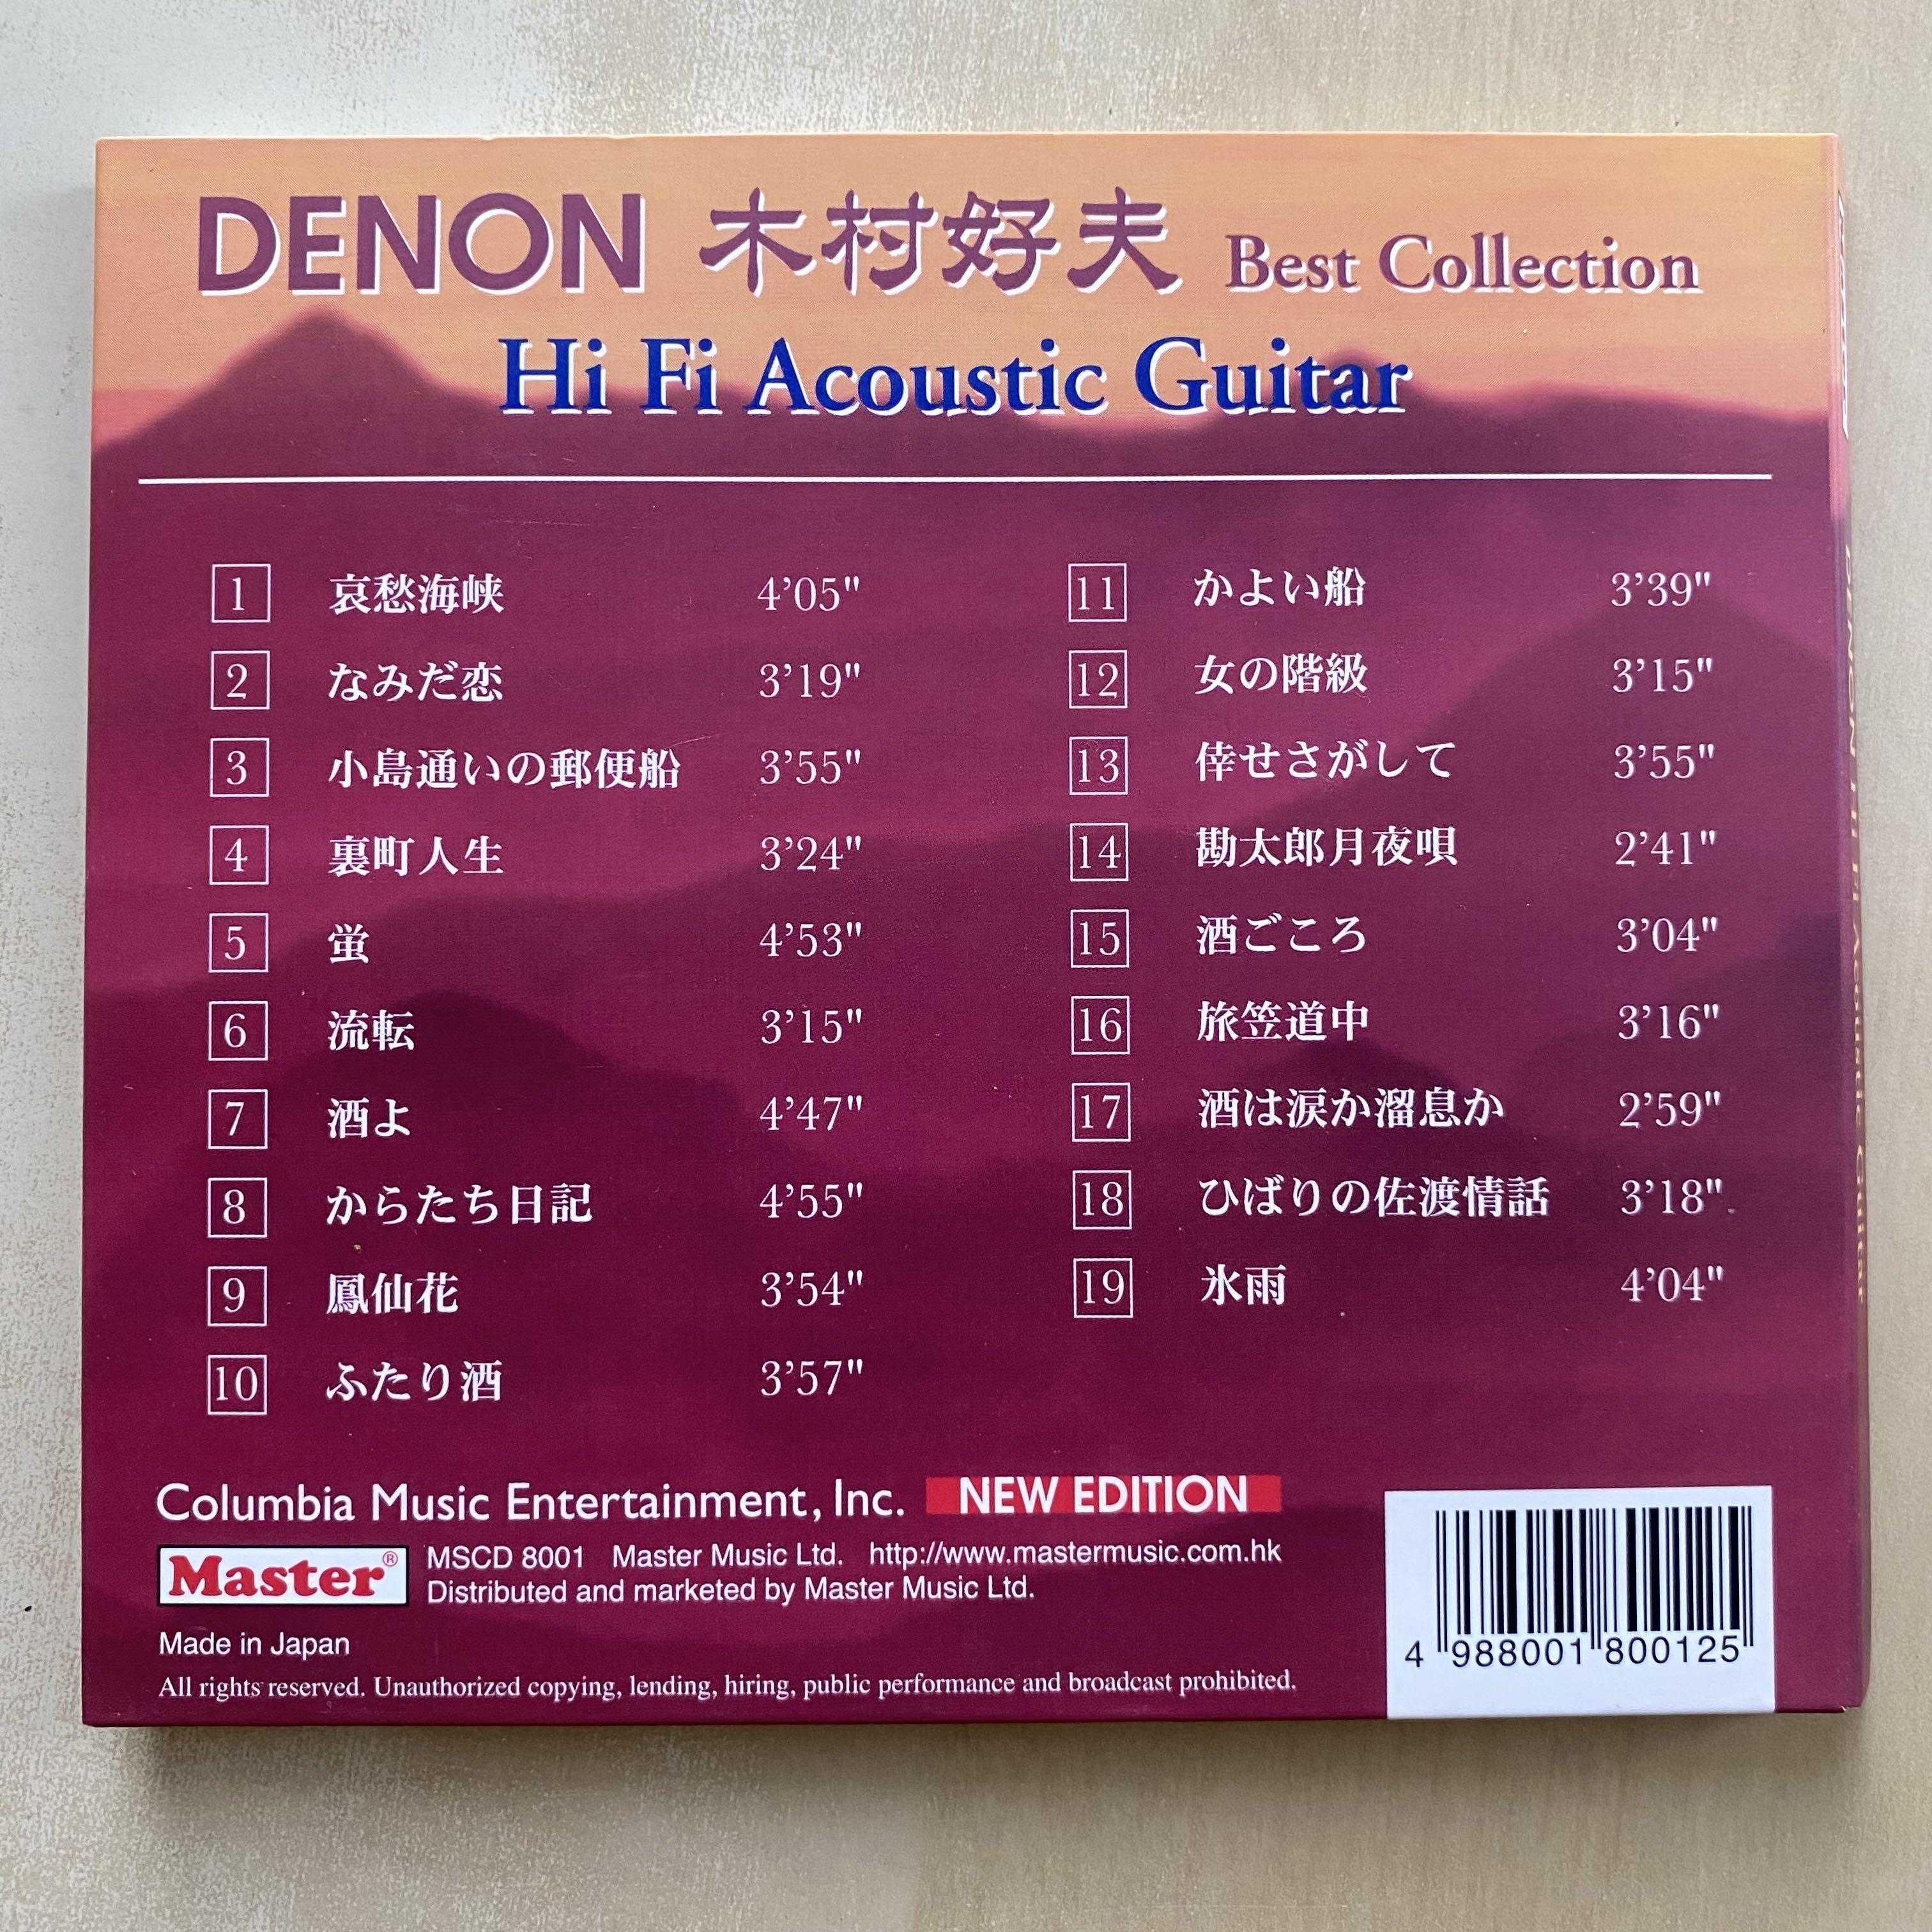 CD丨木村好夫最精選第一集/ Yoshio Kimura Denon HI FI Guitar Best